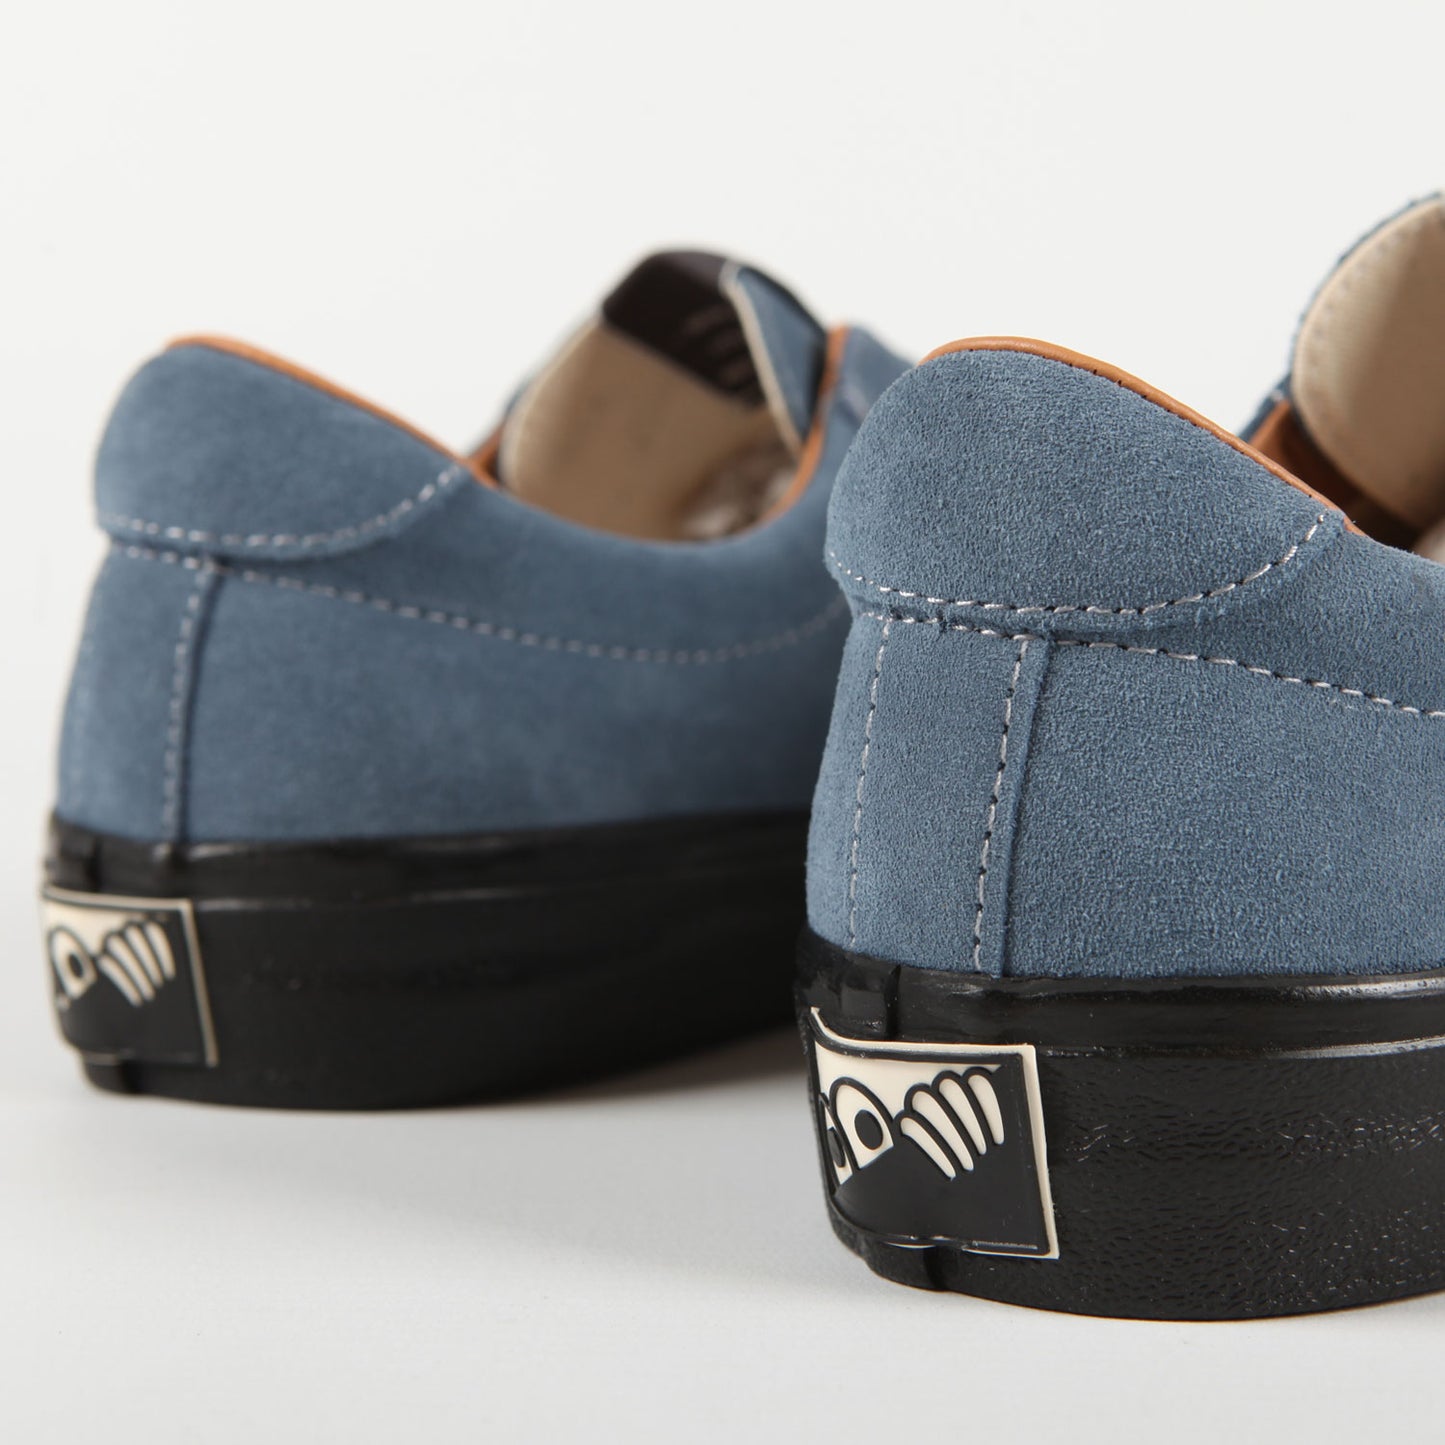 Last Resort 'VM001 Suede Lo' Skate Shoes (Dusty Blue / Black)